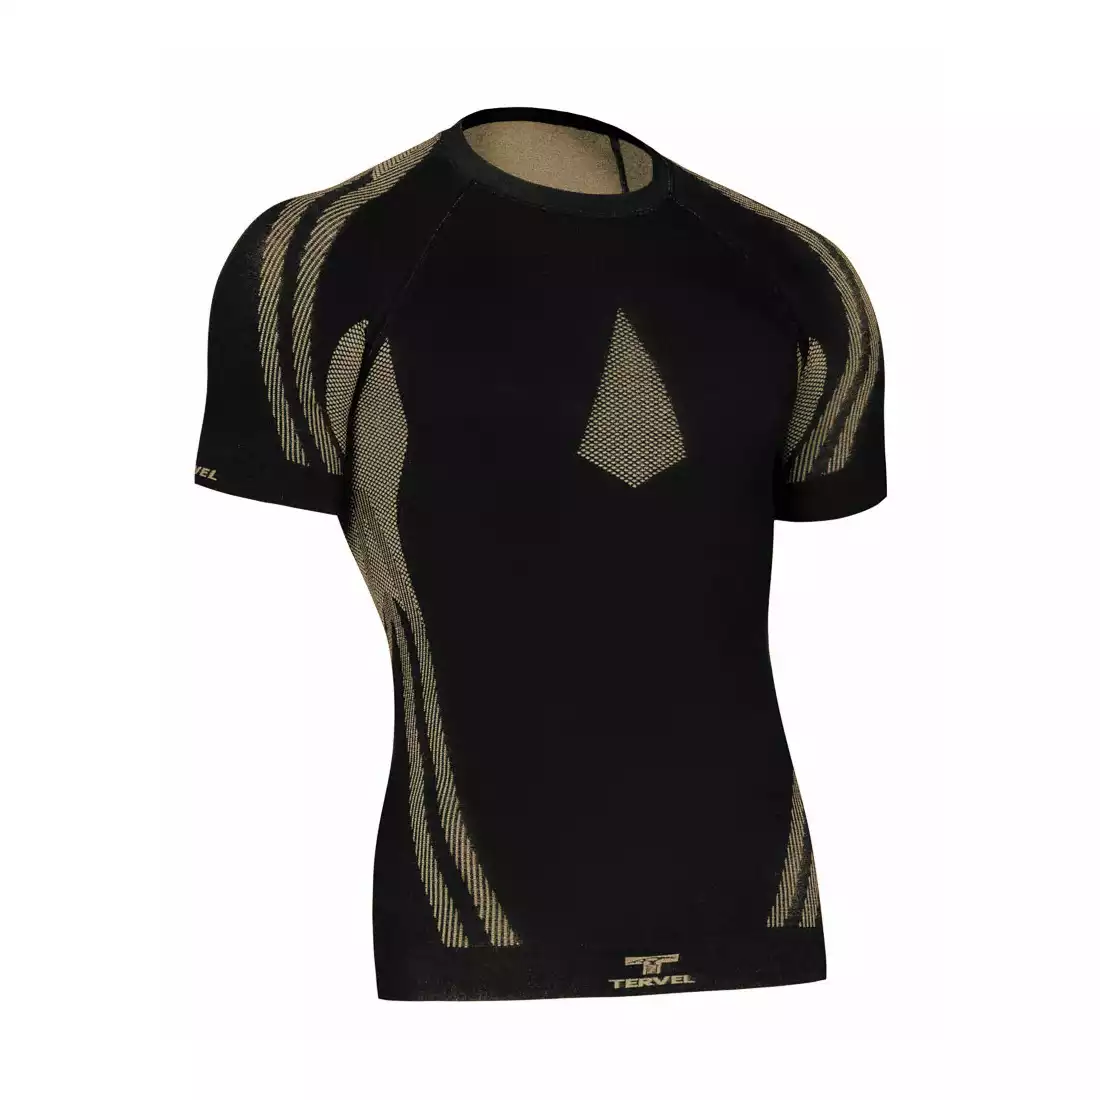 TERVEL OPTILINE LIGHT MOD-02 - męska koszulka termoaktywna z krótkim rękawem, kolor: Czarno-złoty